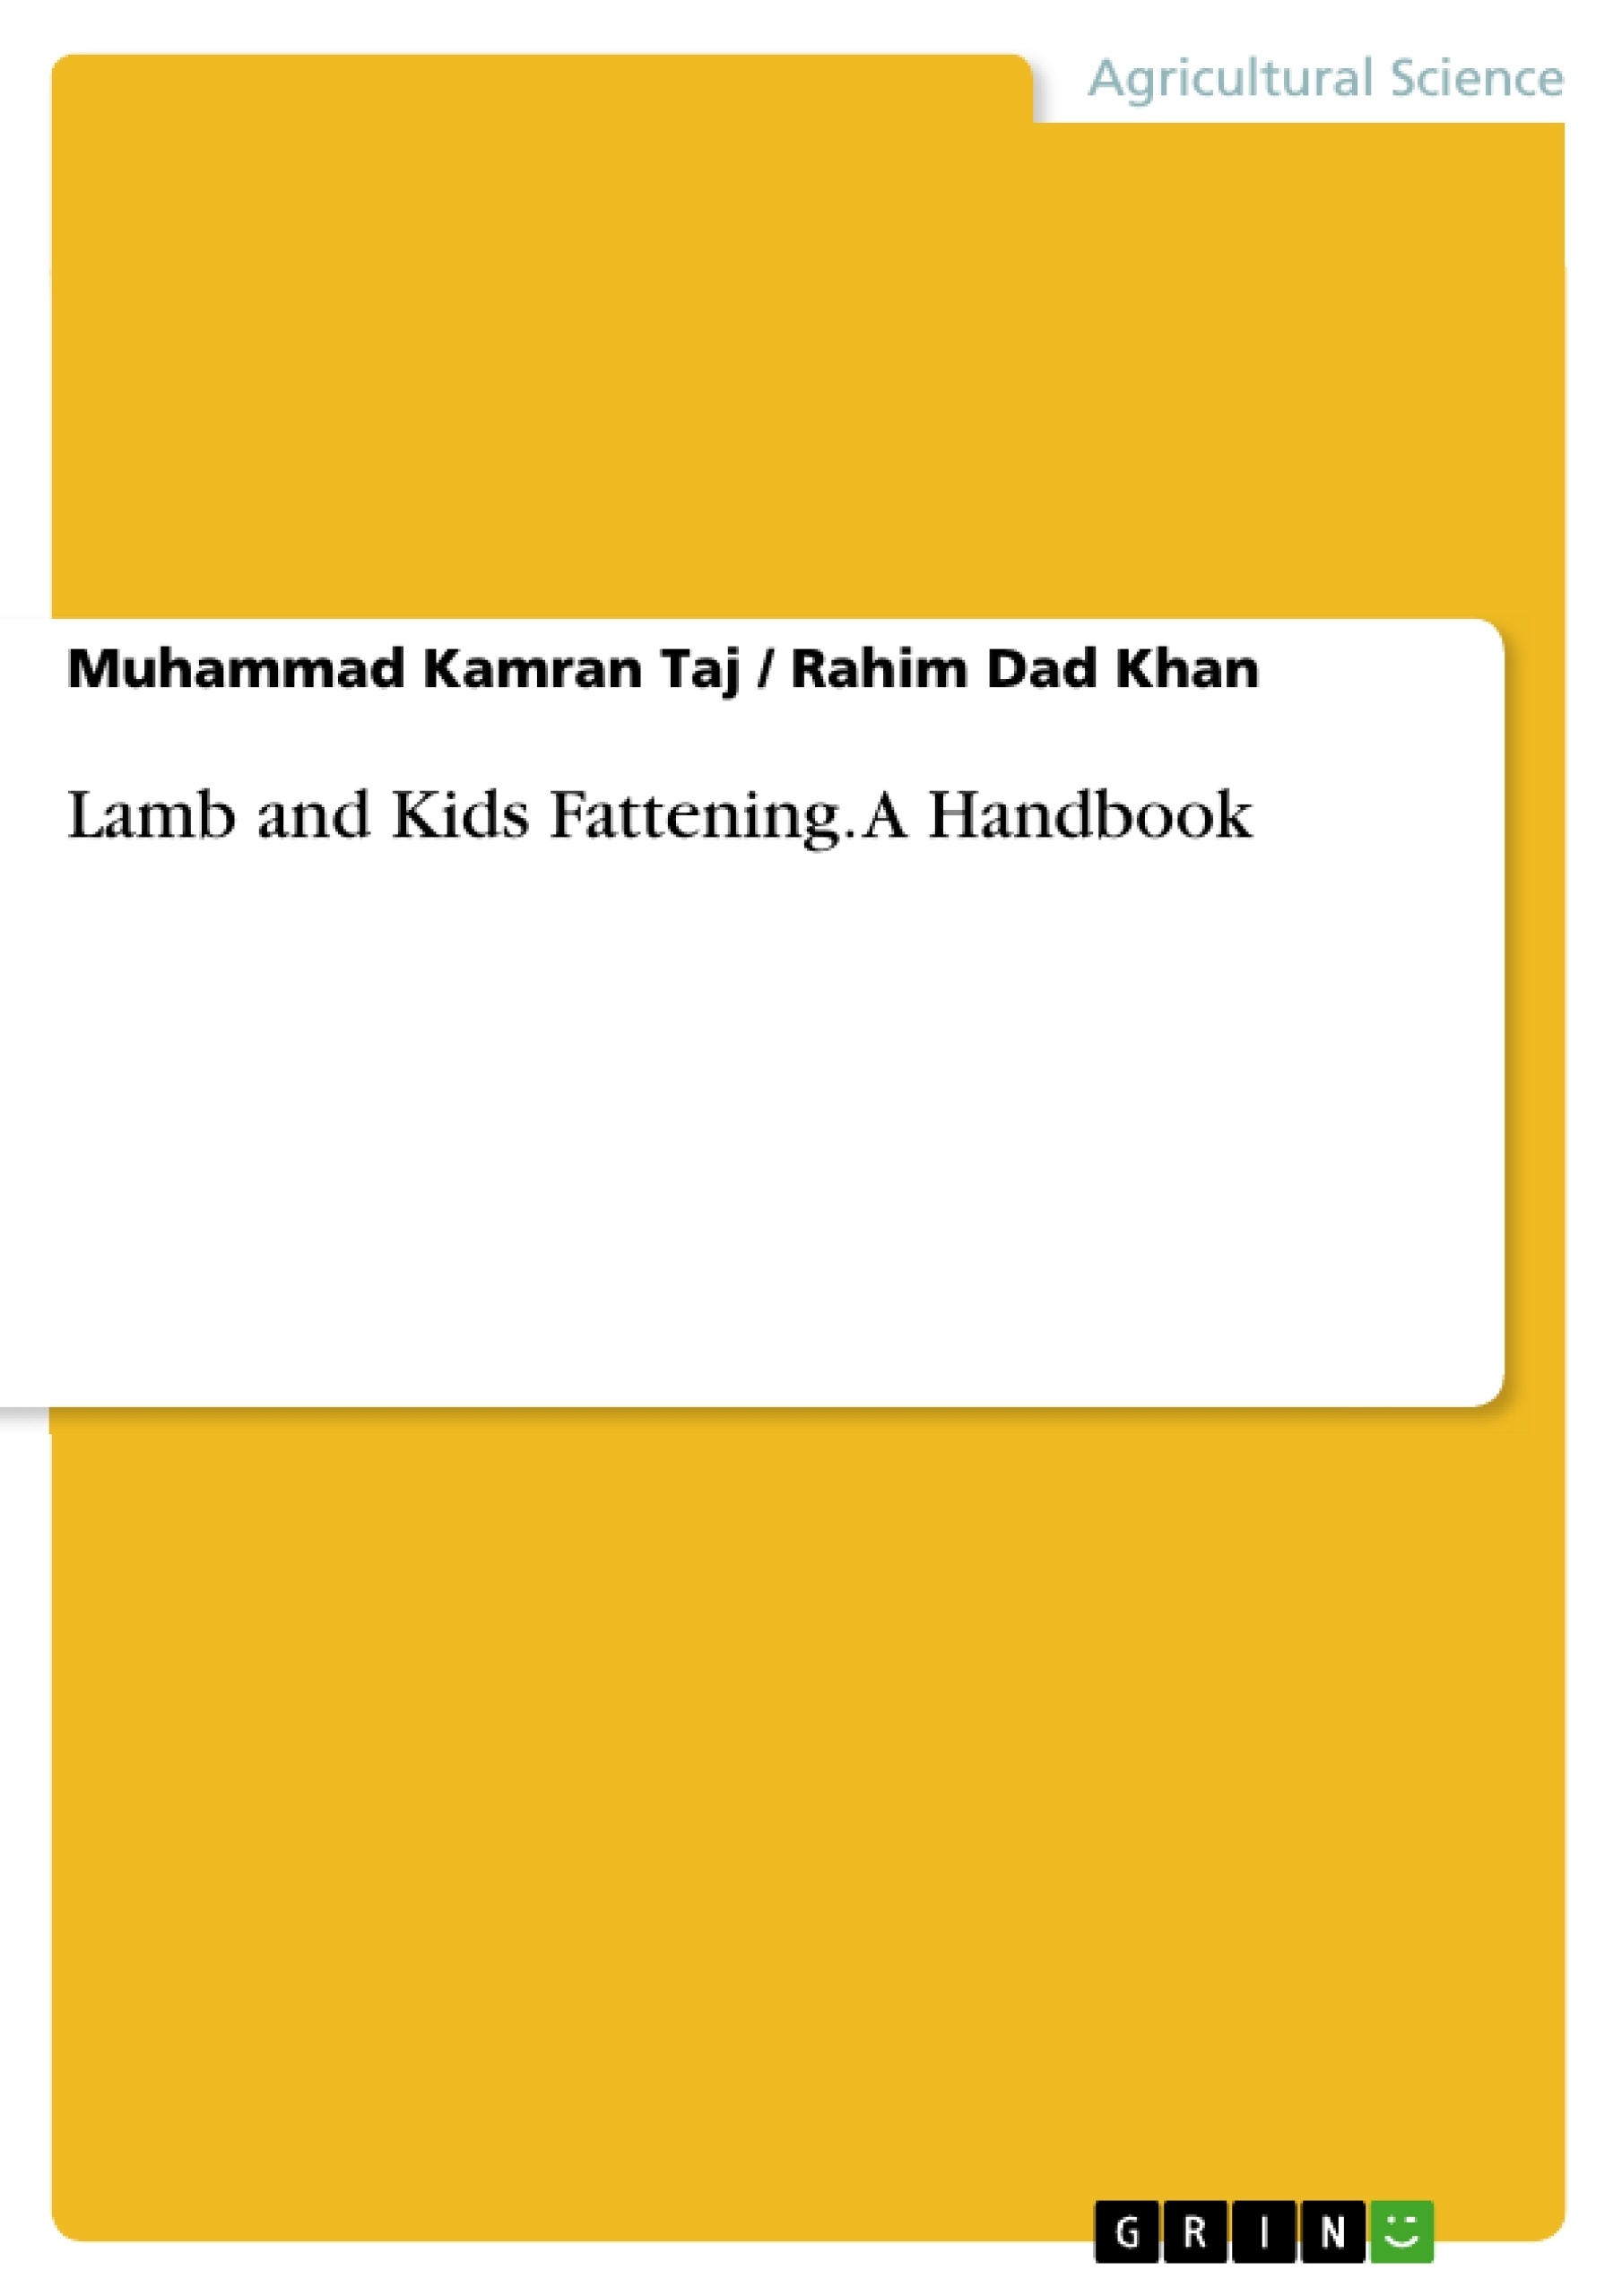 Title: Lamb and Kids Fattening. A Handbook